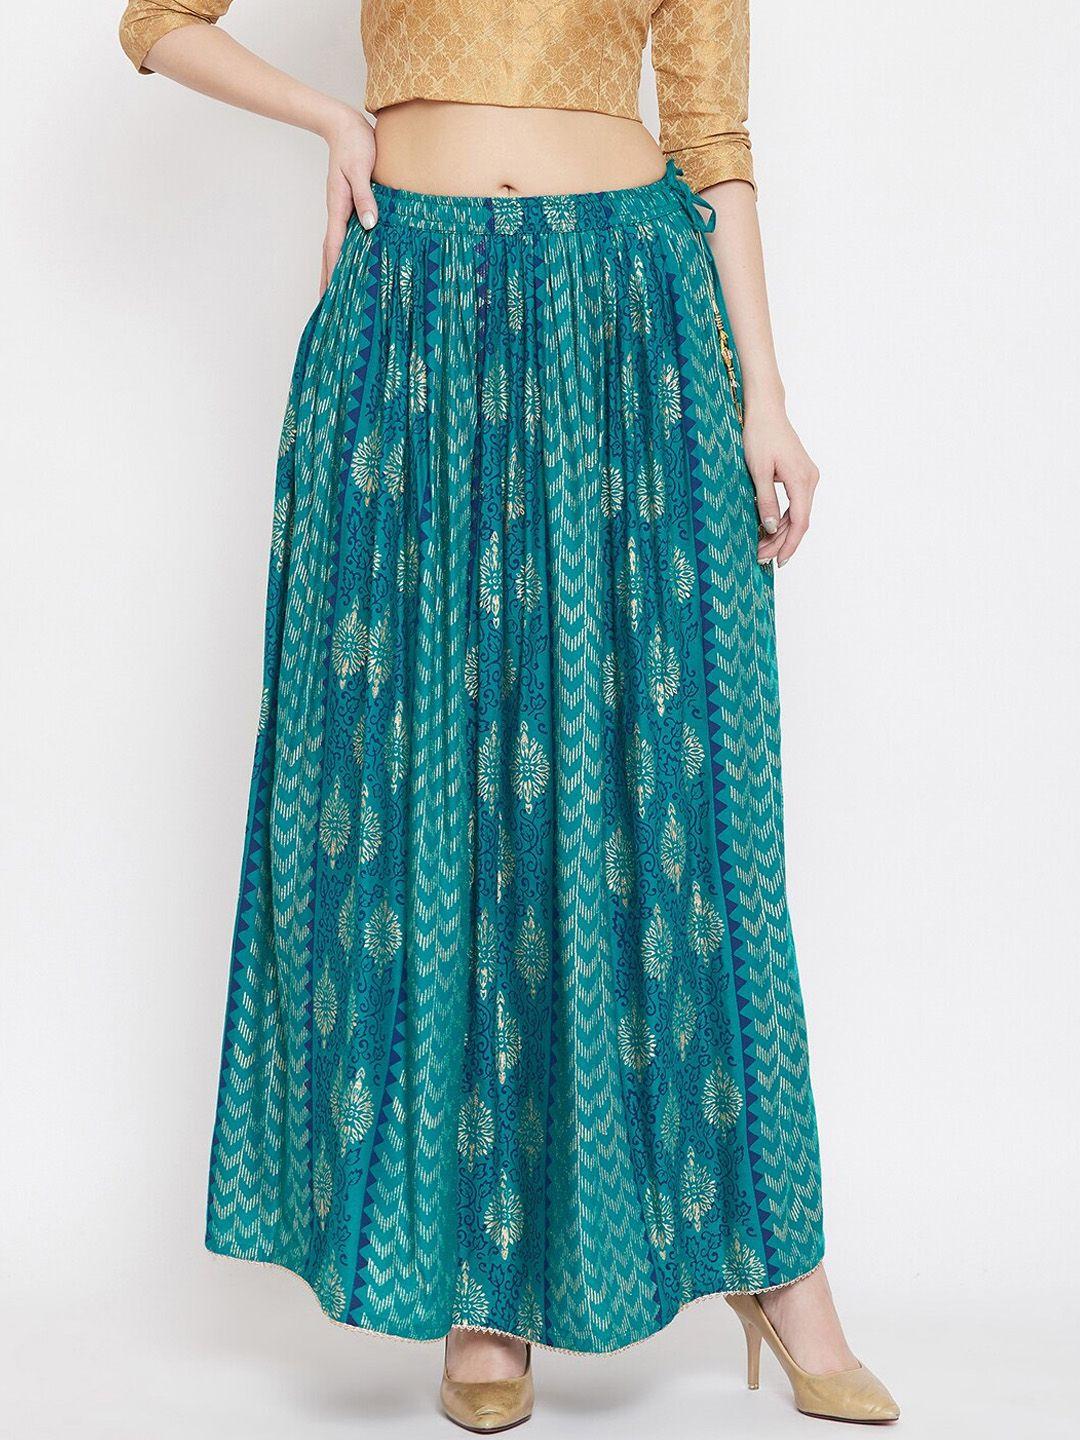 clora creation ethnic motifs printed flared maxi skirt